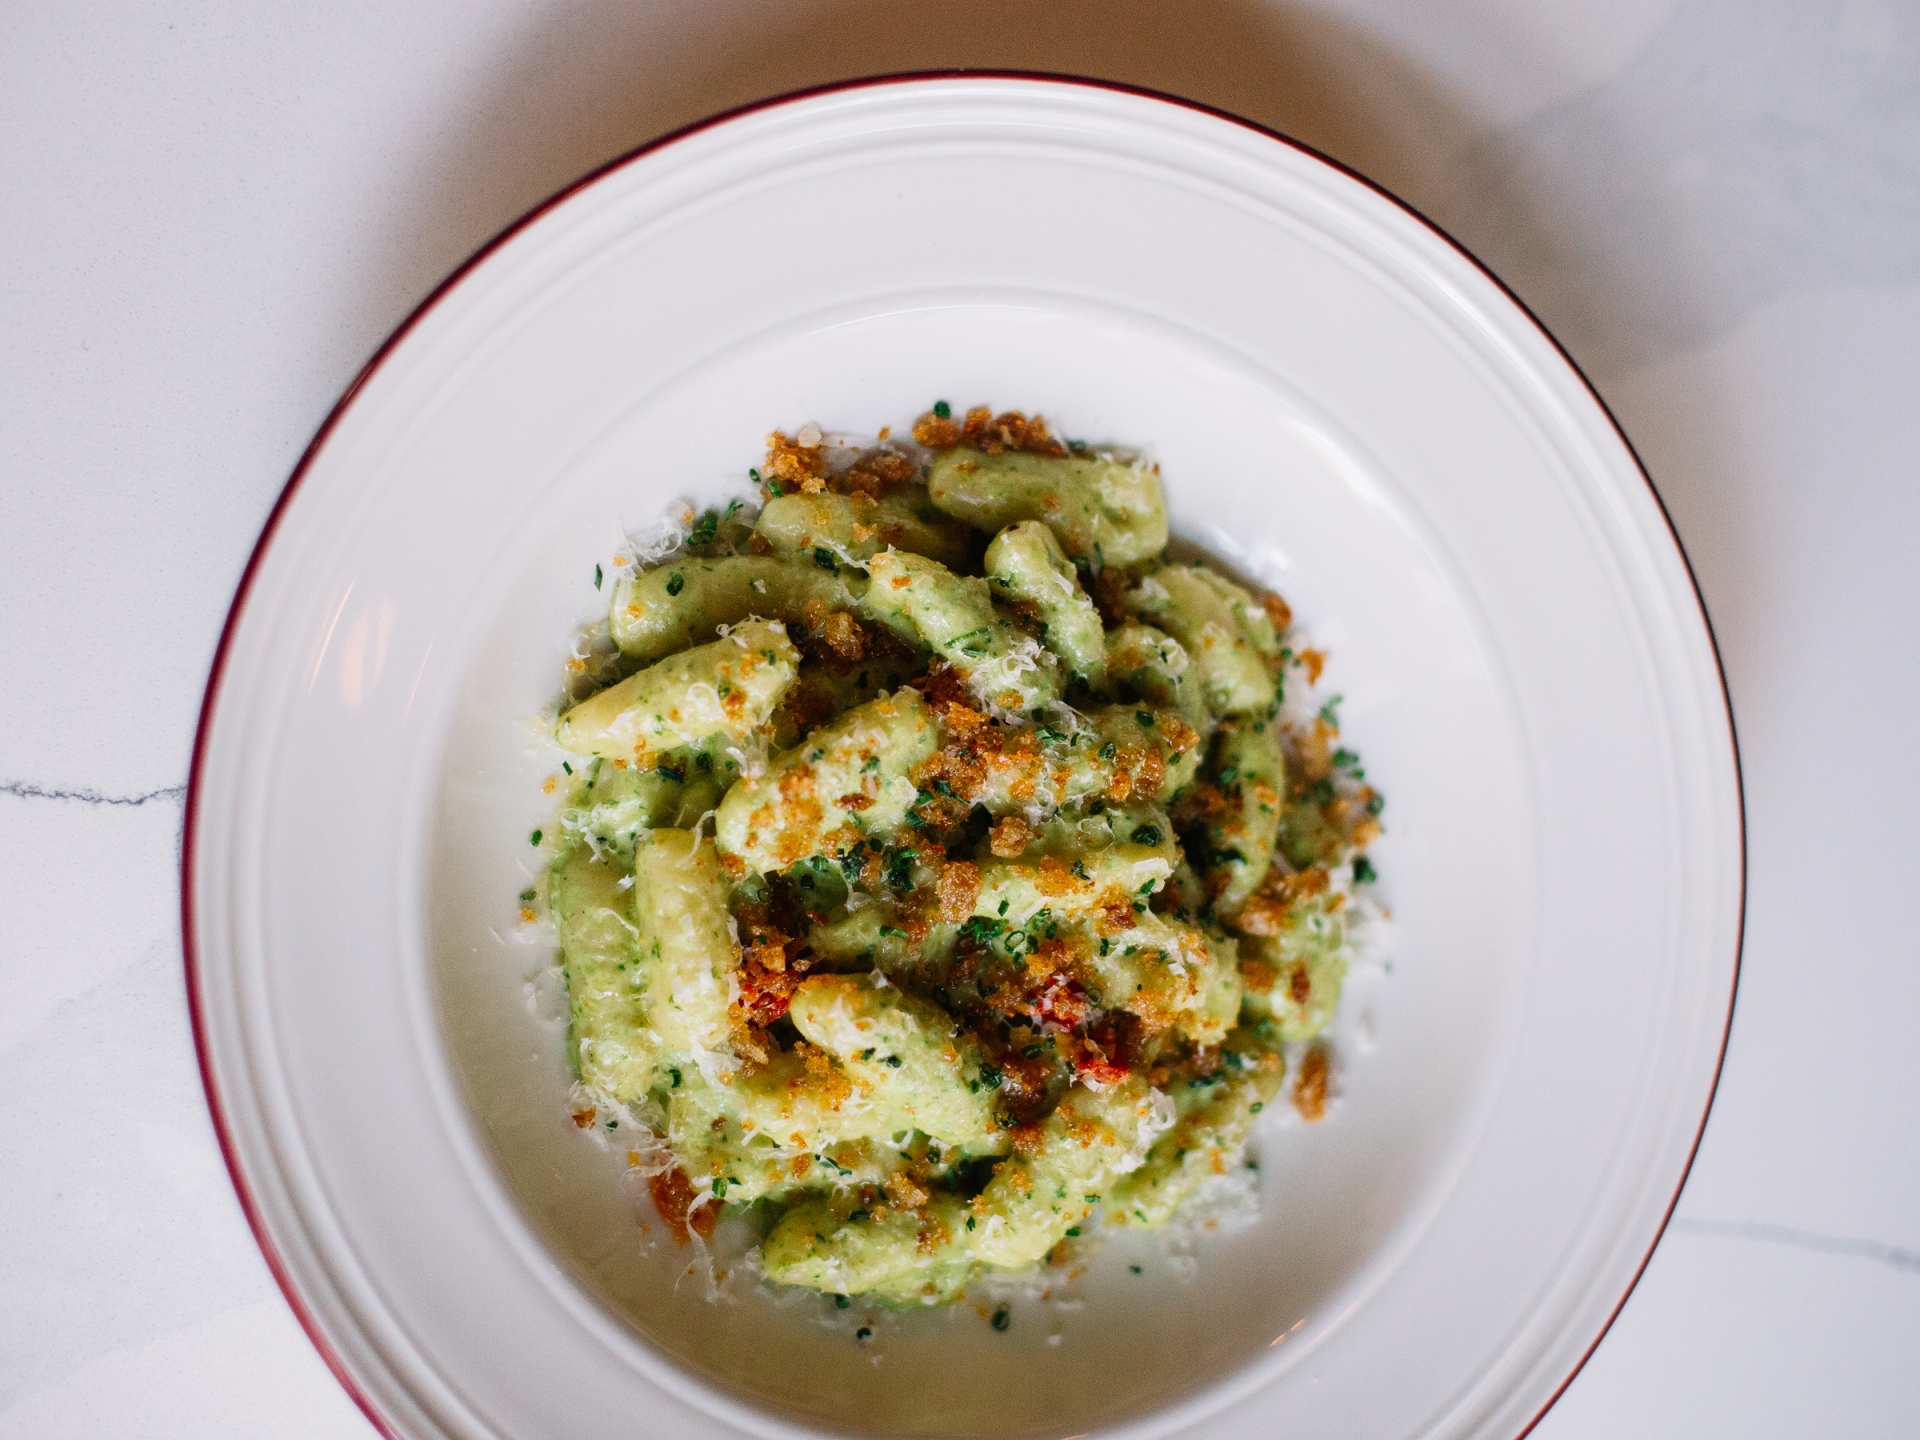 Best new restaurants in Toronto | Ricotta gnocchi at Contrada restaurant in Toronto